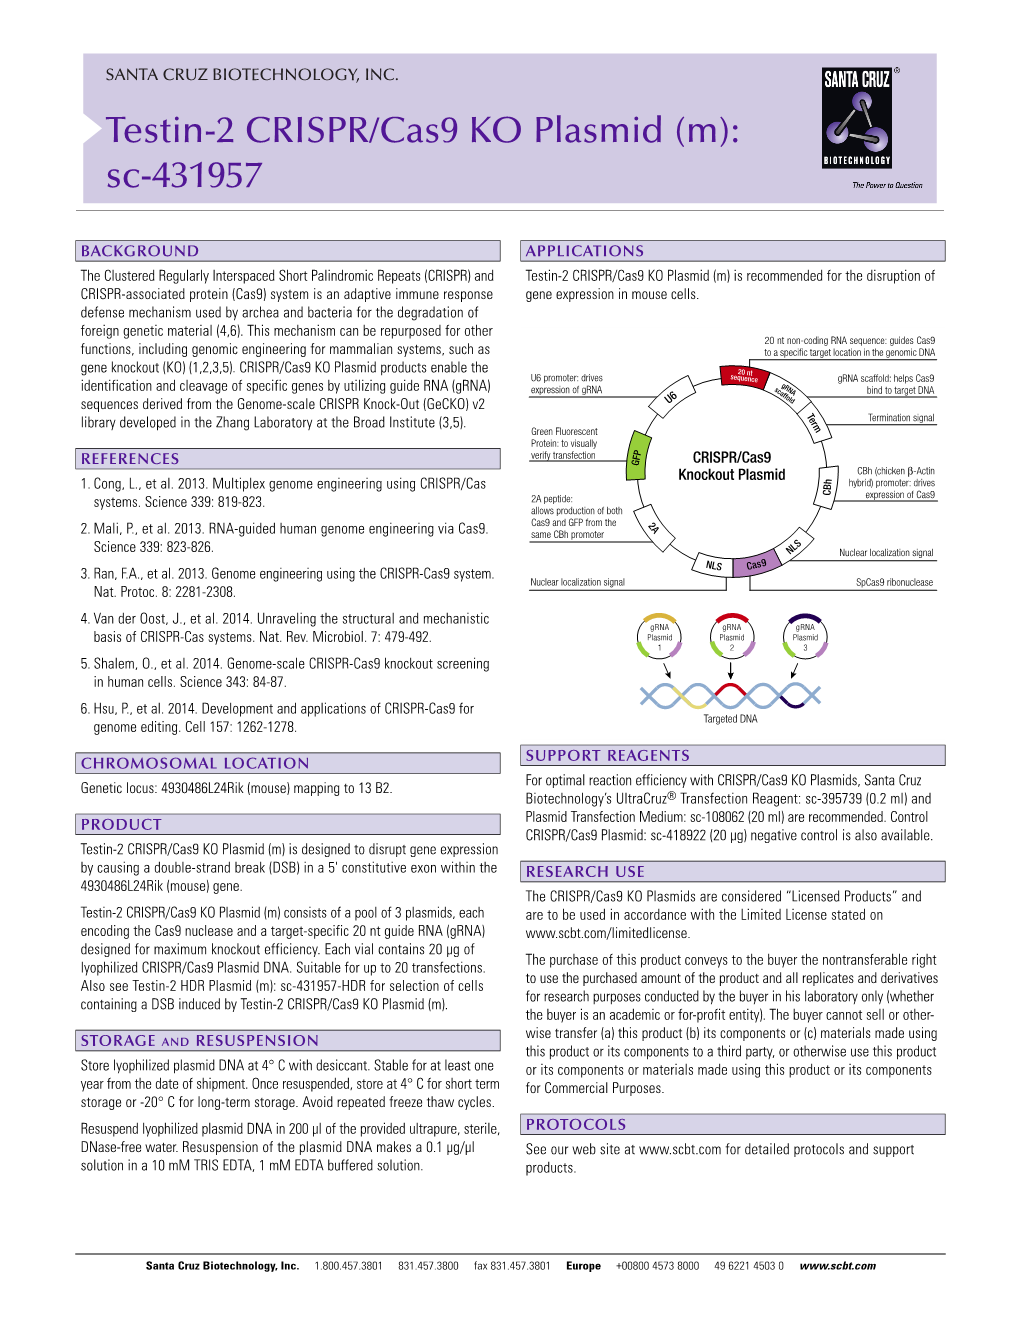 Testin-2 CRISPR/Cas9 KO Plasmid (M): Sc-431957